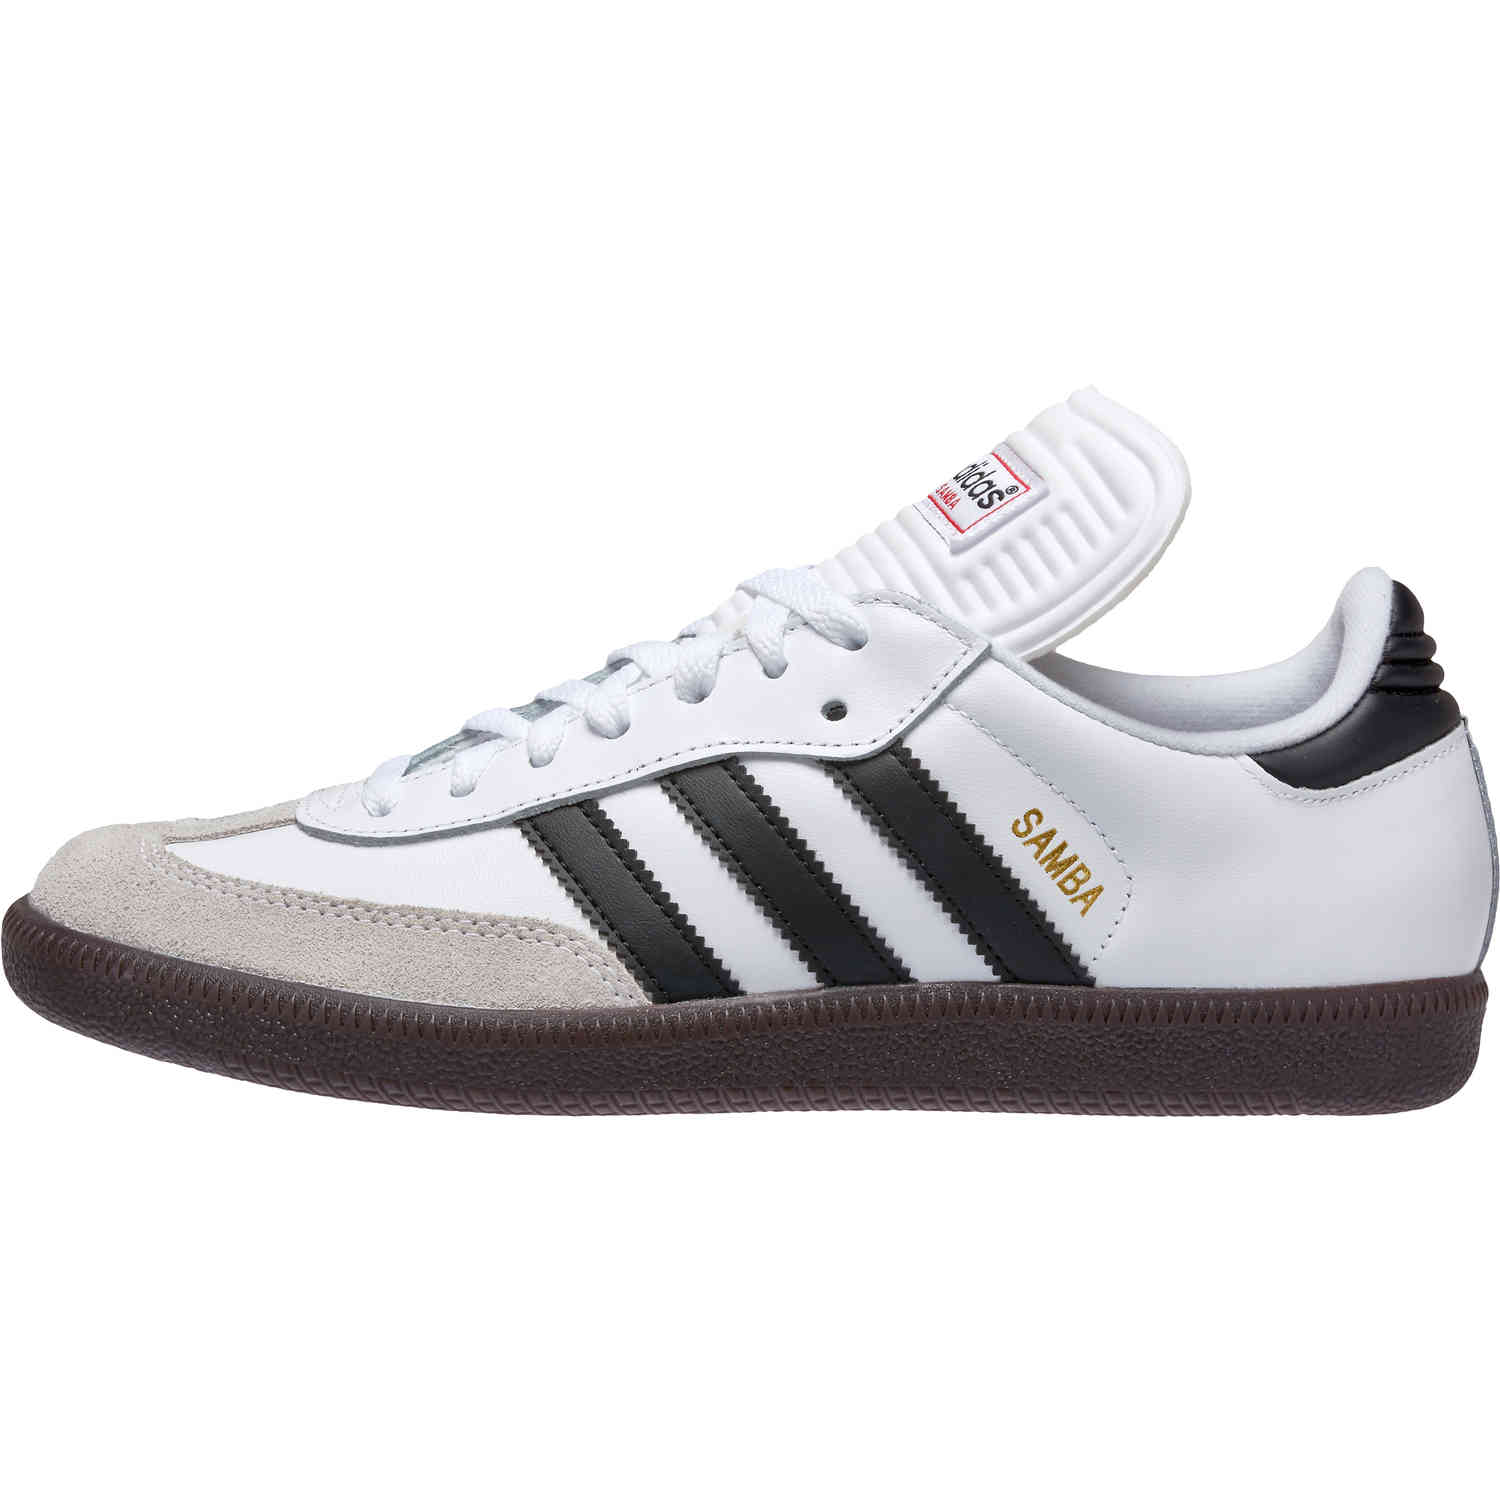 adidas samba classic shoes